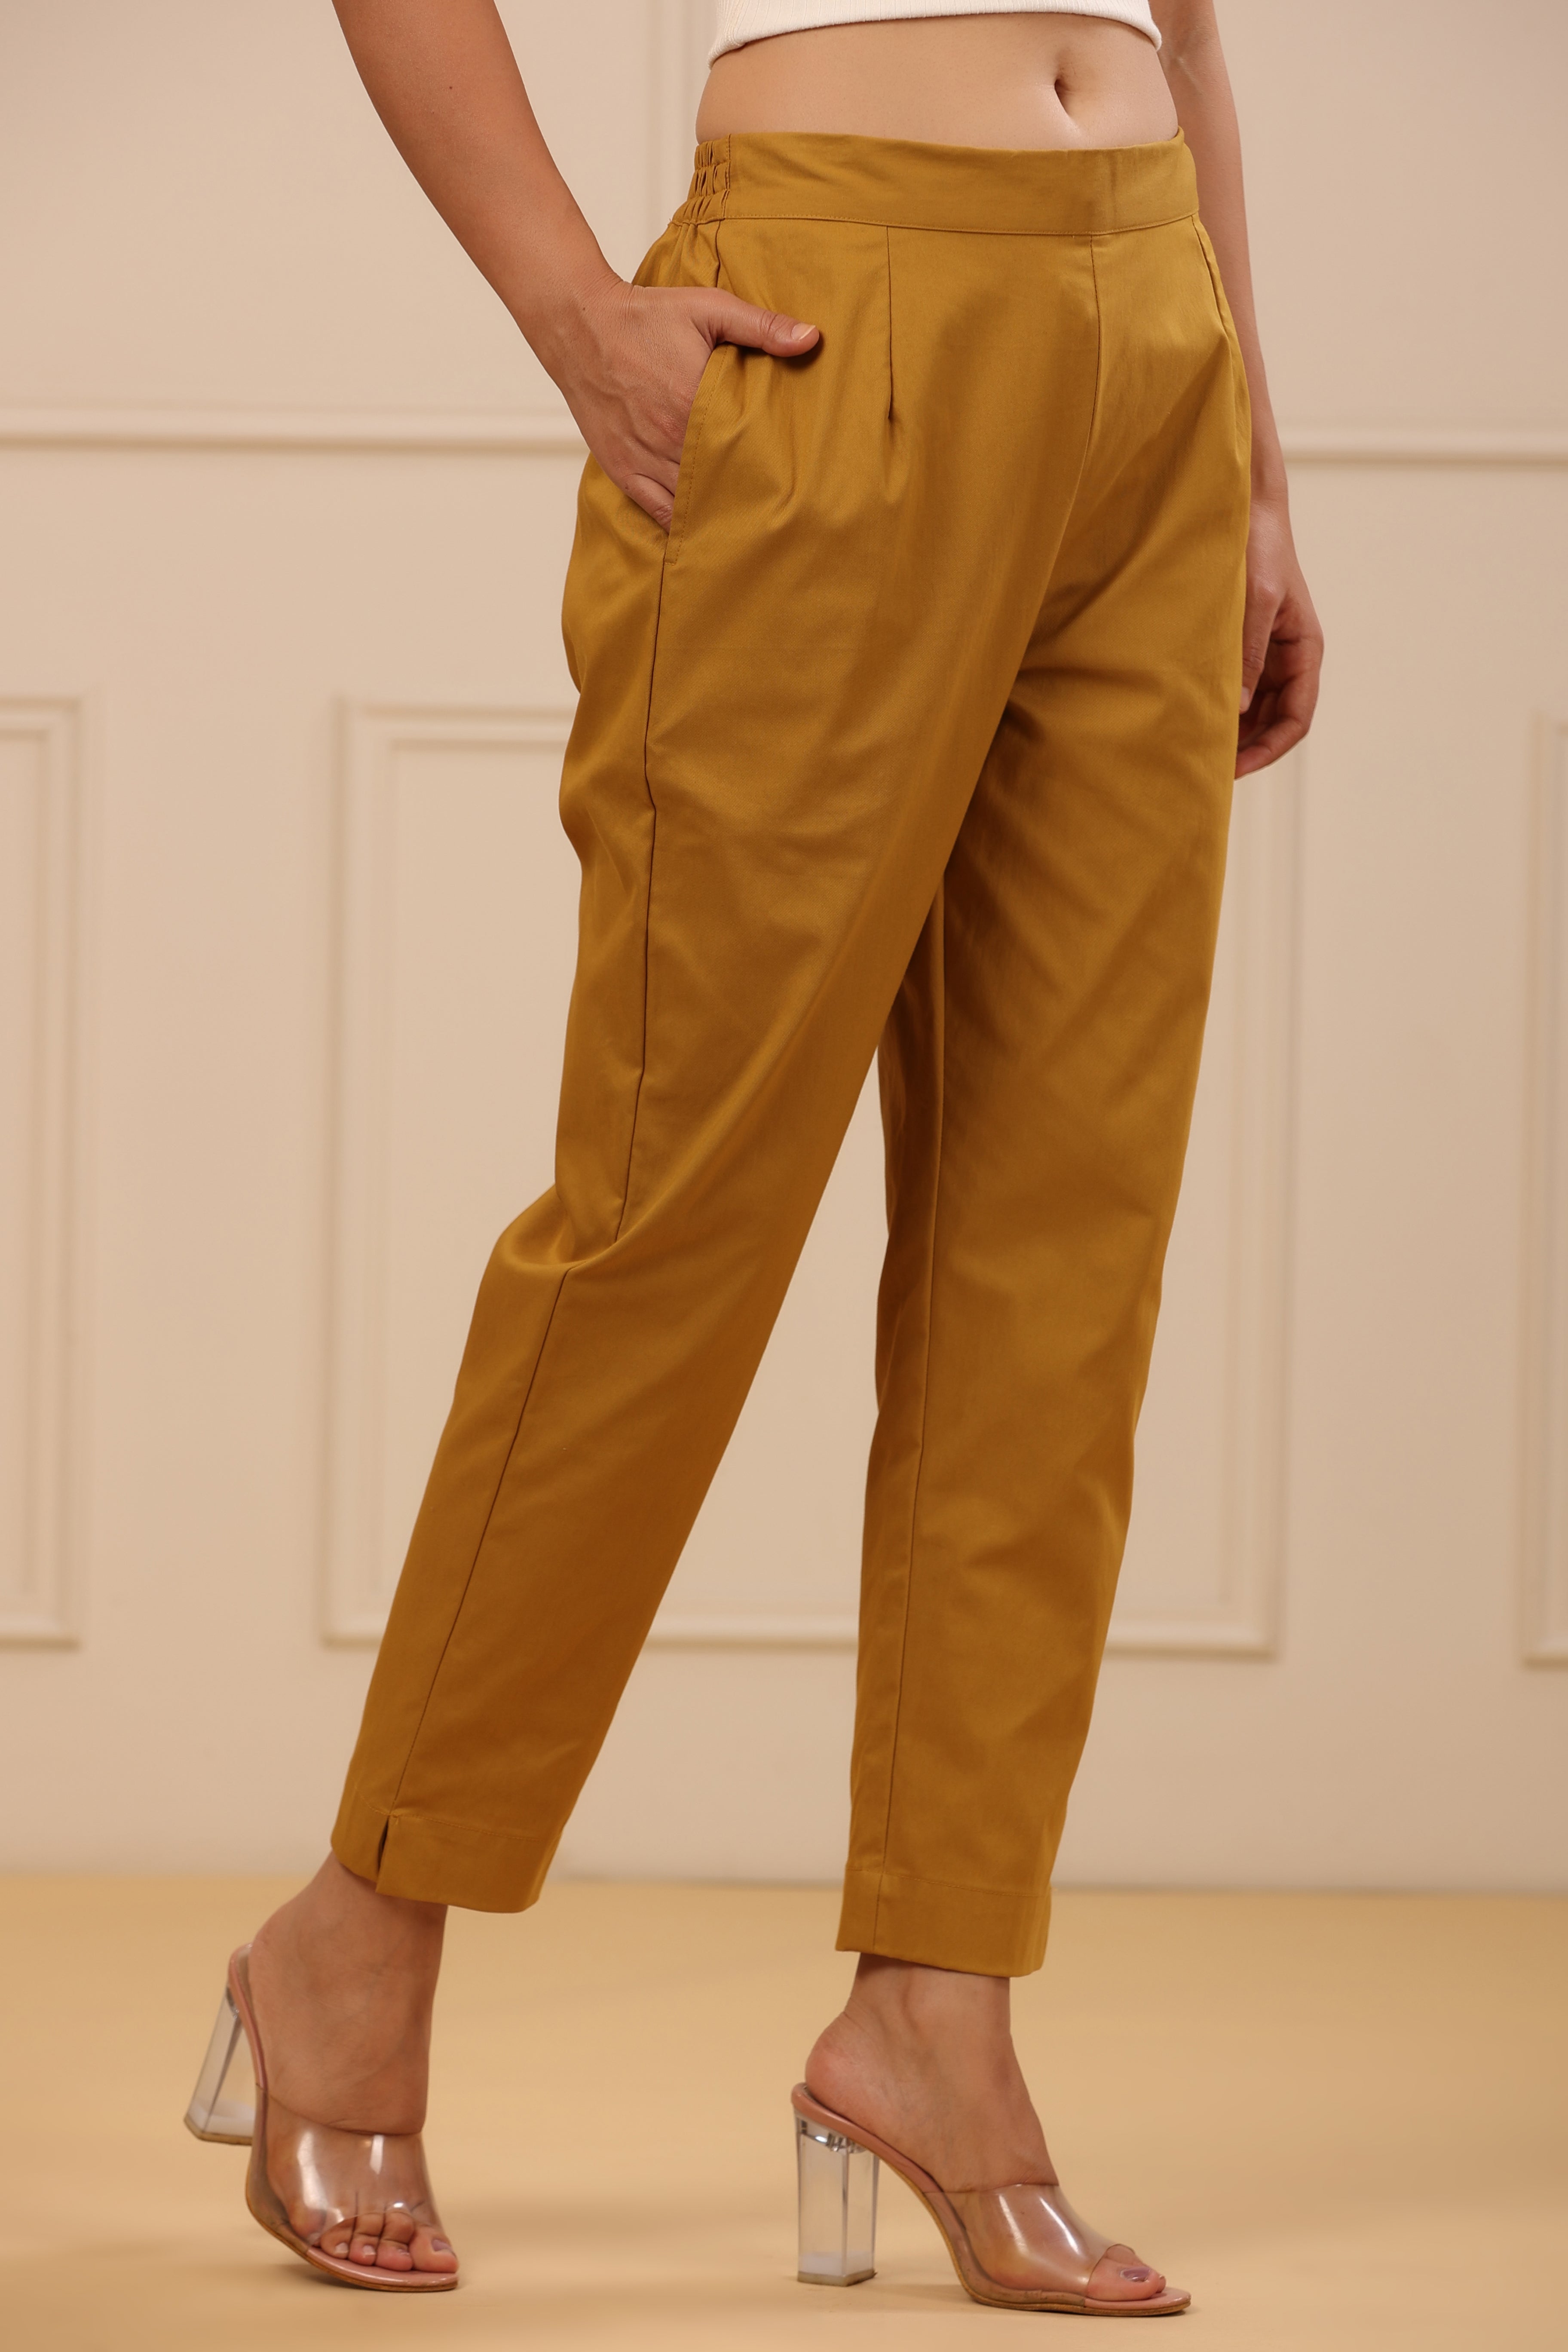 Juniper Women's Mustard Cotton Spandex Solid Straight Pant